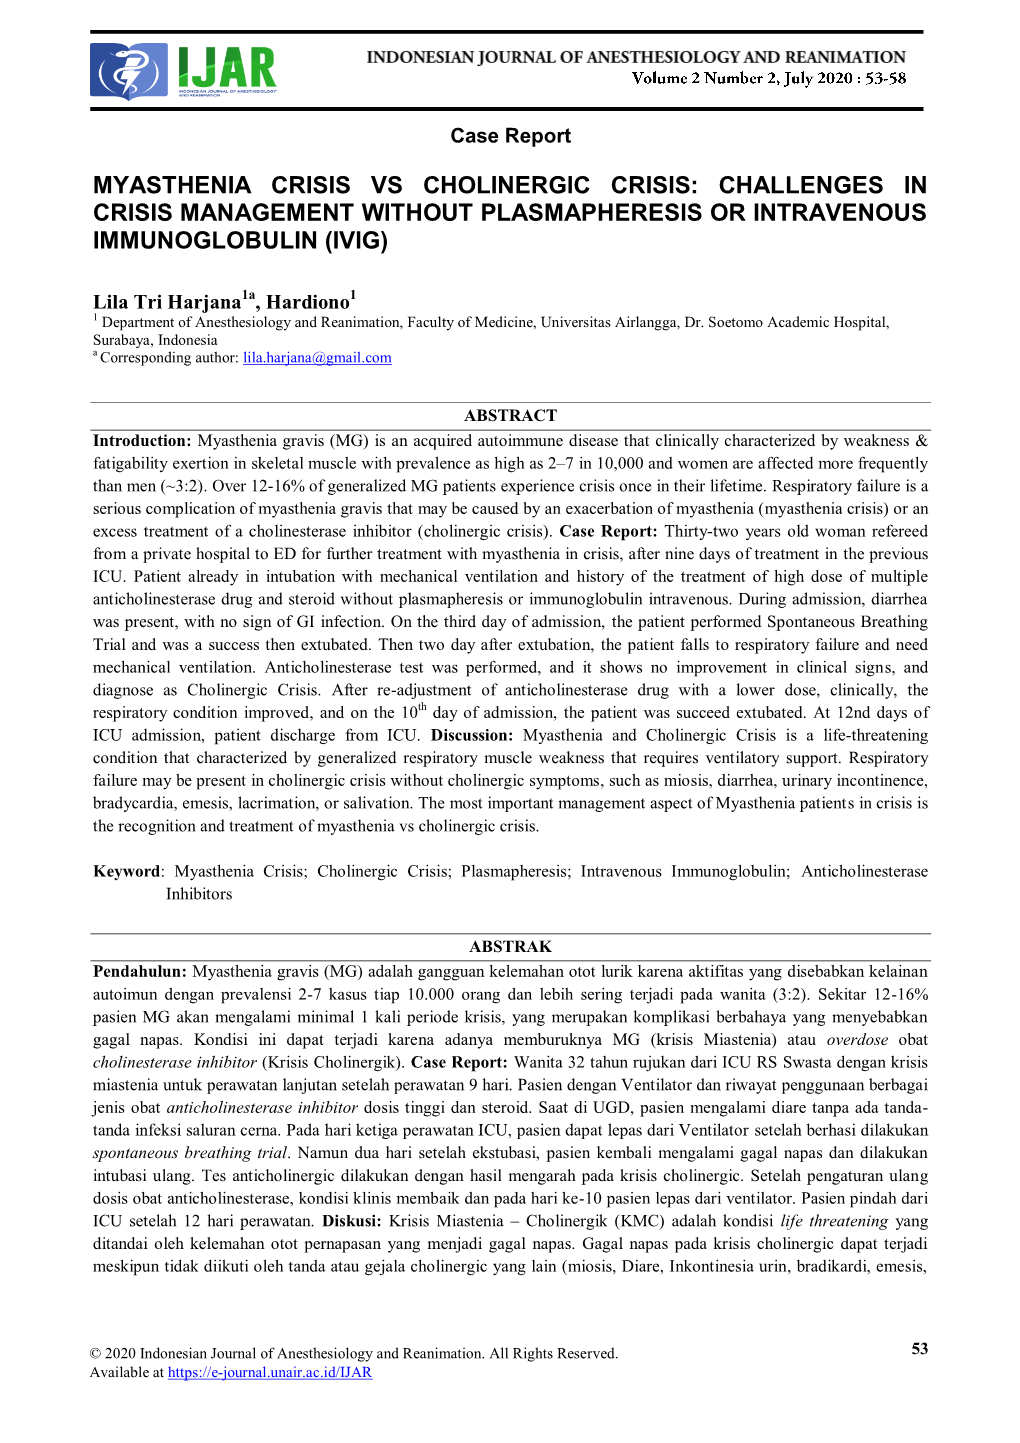 Myasthenia Crisis Vs Cholinergic Crisis: Challenges in Crisis Management Without Plasmapheresis Or Intravenous Immunoglobulin (Ivig)